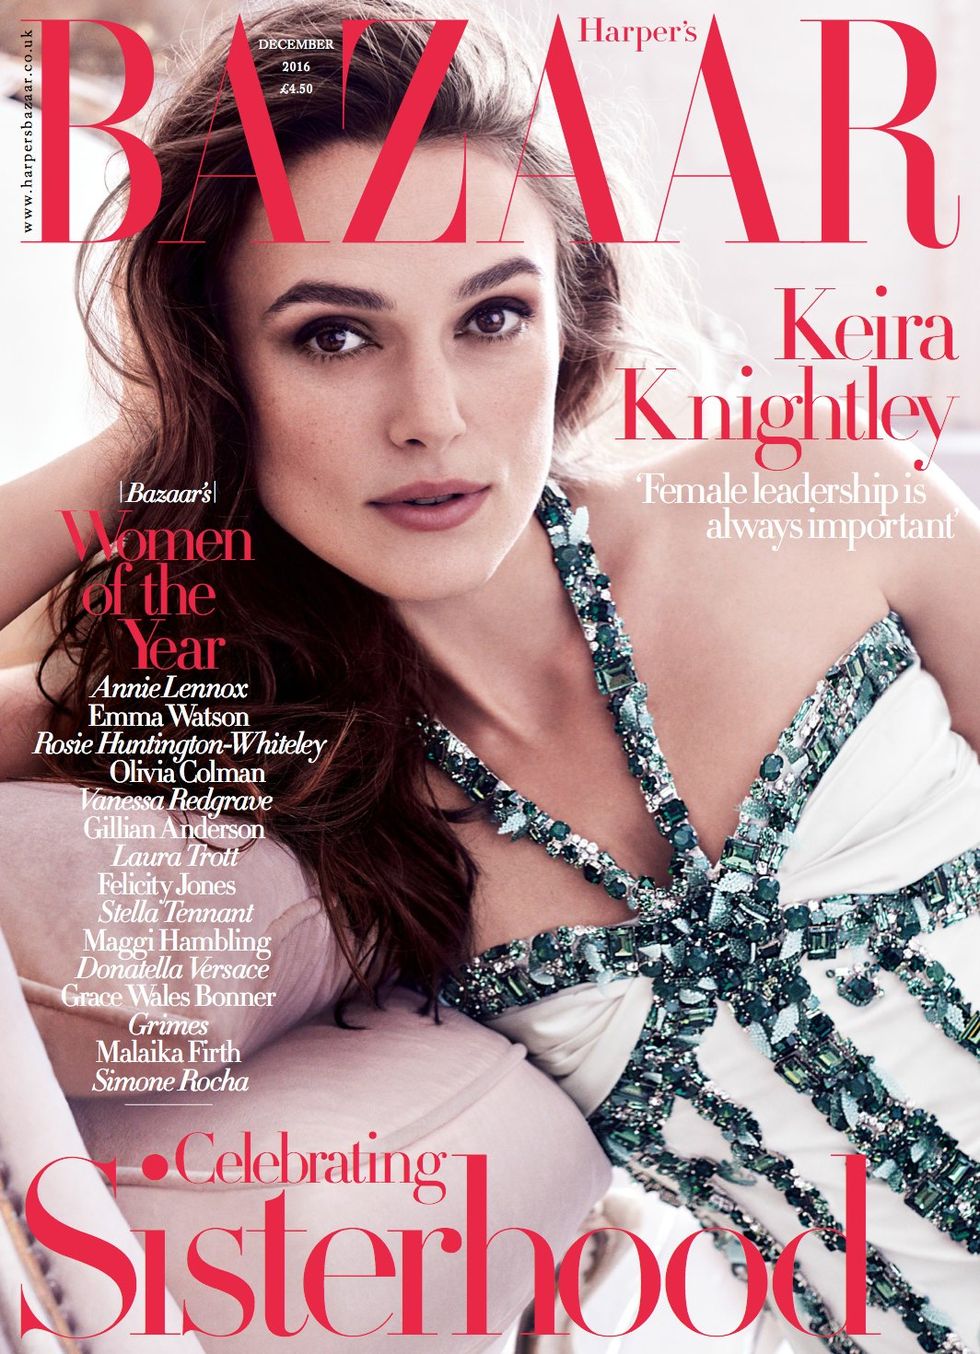 Keira Knightley for Harper's Bazaar cover December 2016